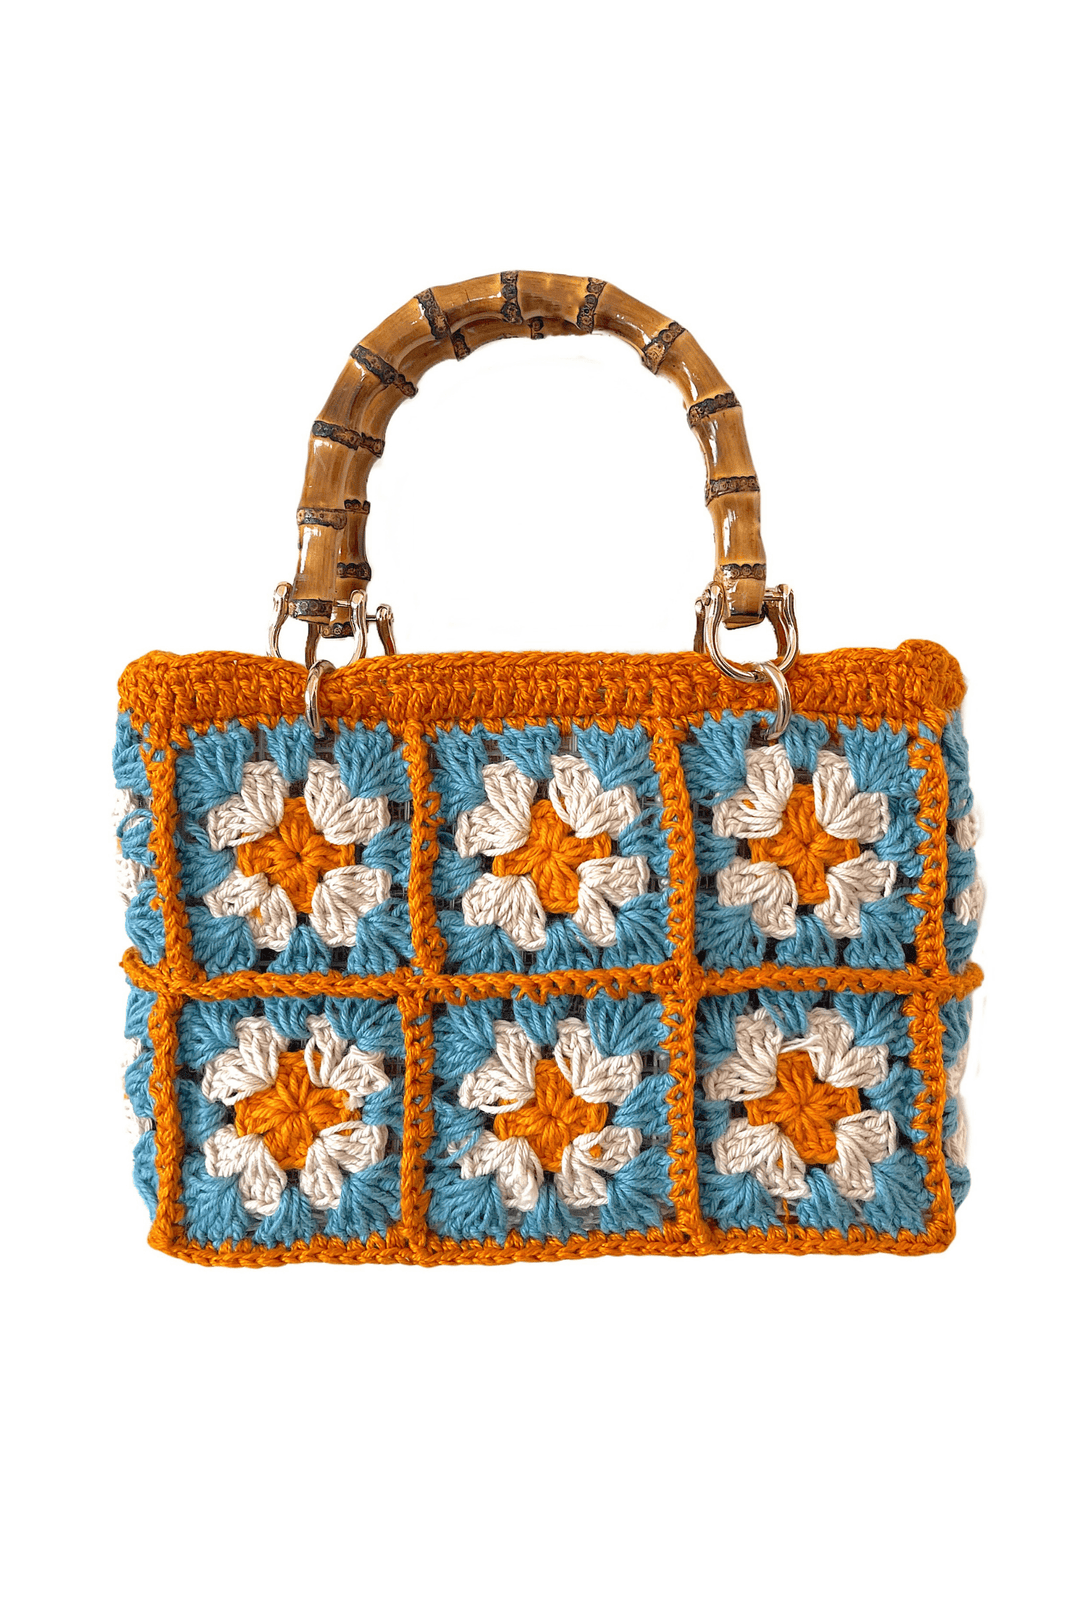 Bolsa Crochê Nina Azul com Laranjada - Sohoostyle